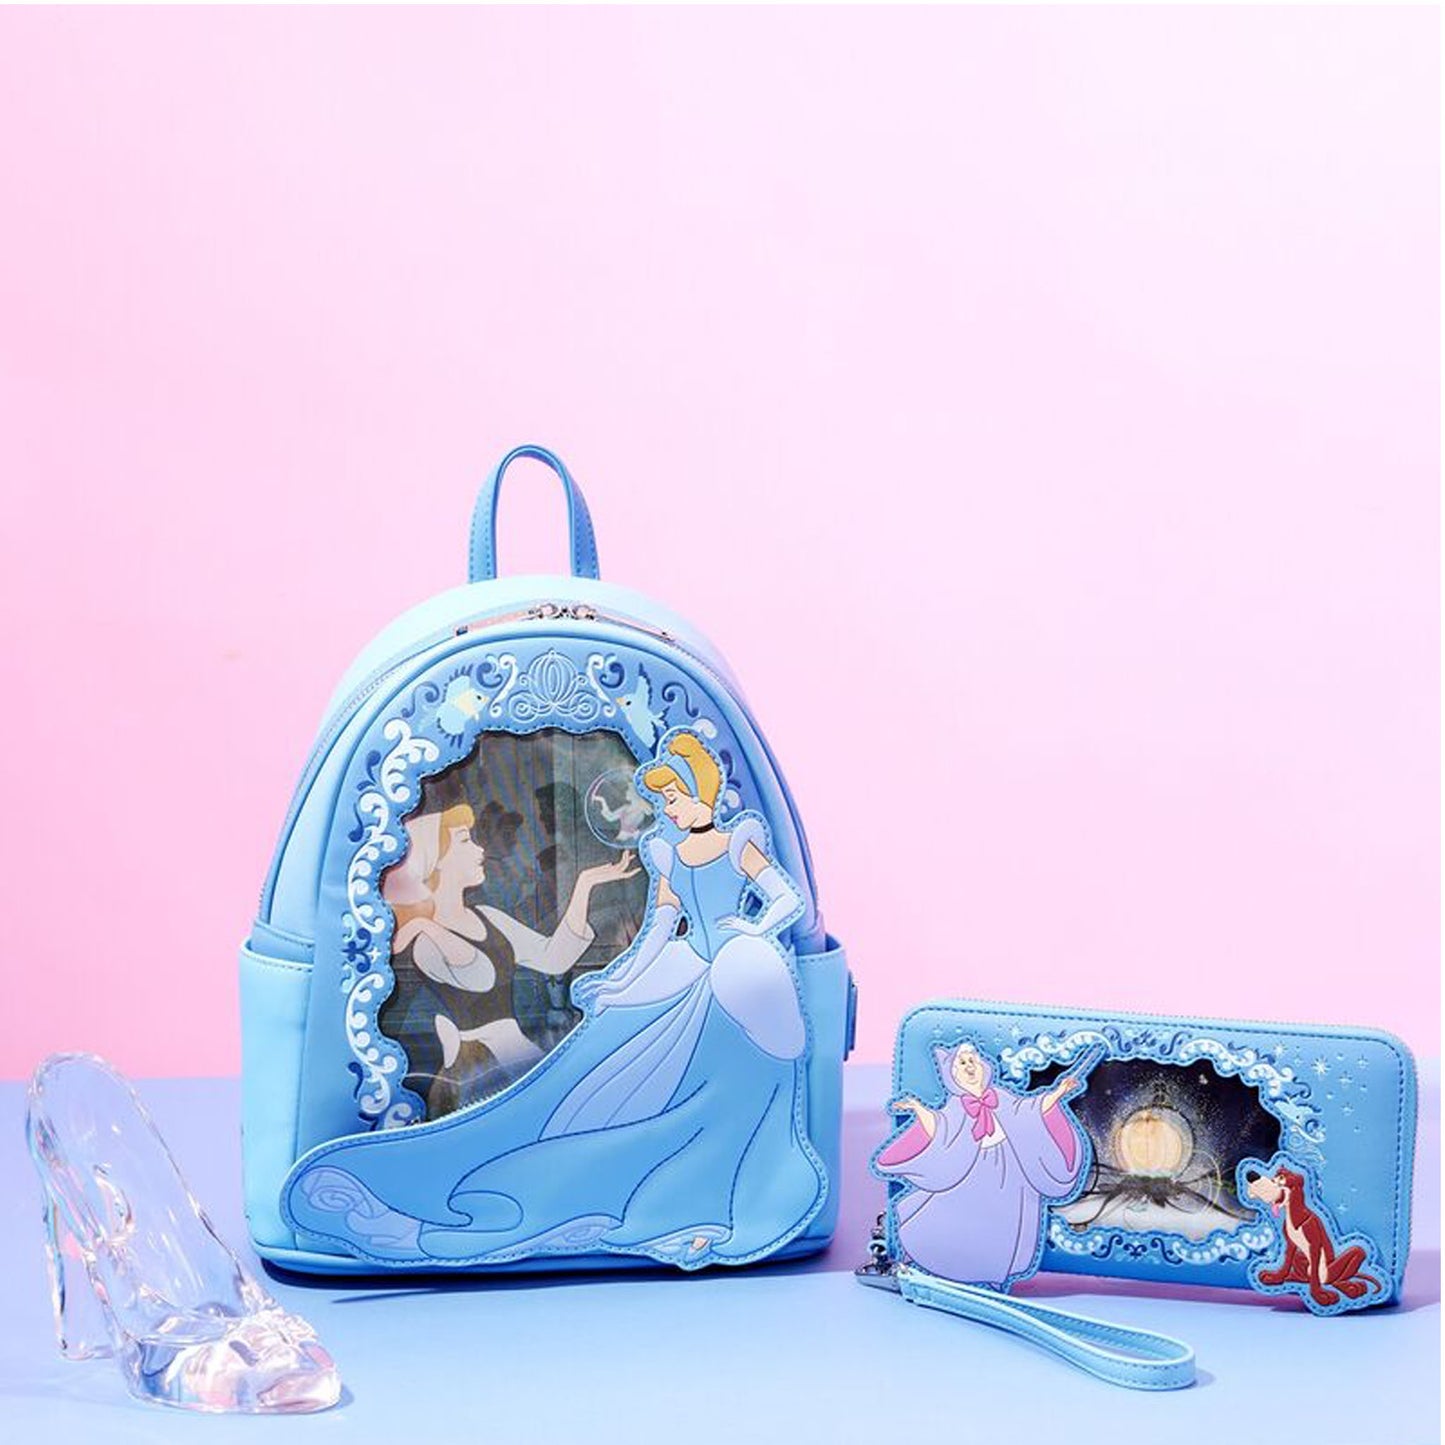 Cinderella (Disney) Lenticular Princess Series Zip-Around Wristlet Wallet by Loungefly